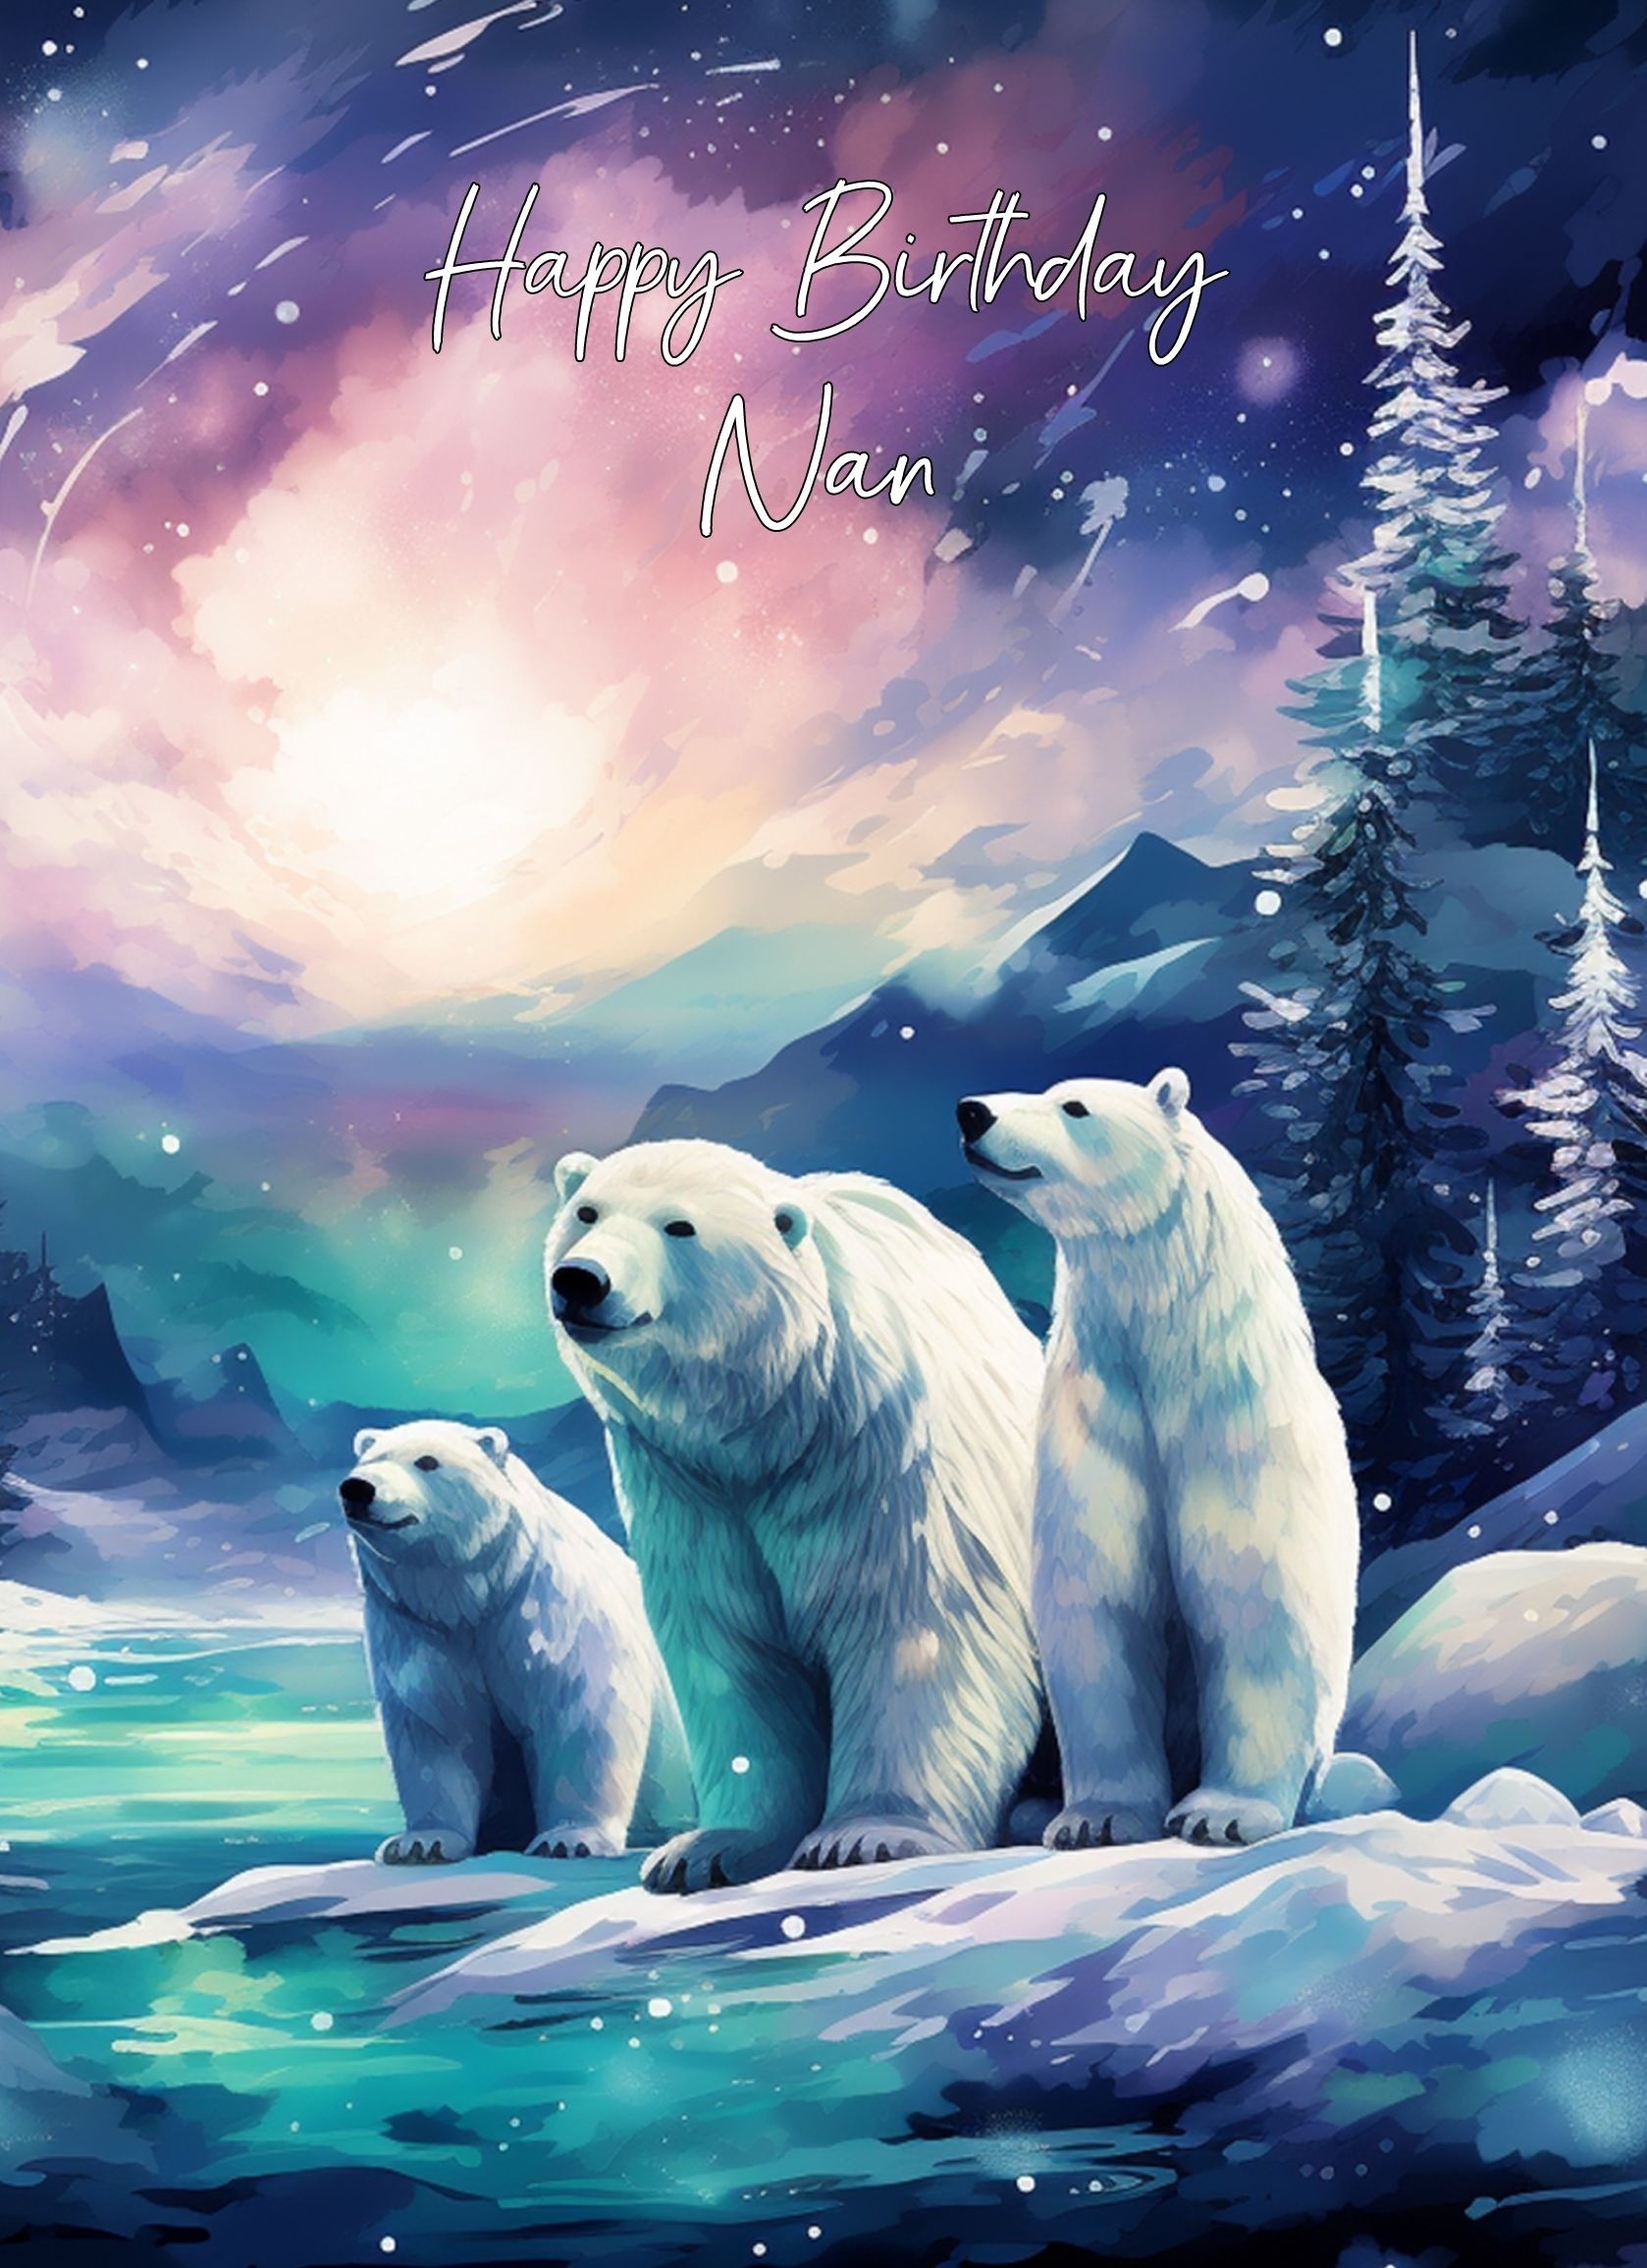 Polar Bear Art Birthday Card For Nan (Design 1)